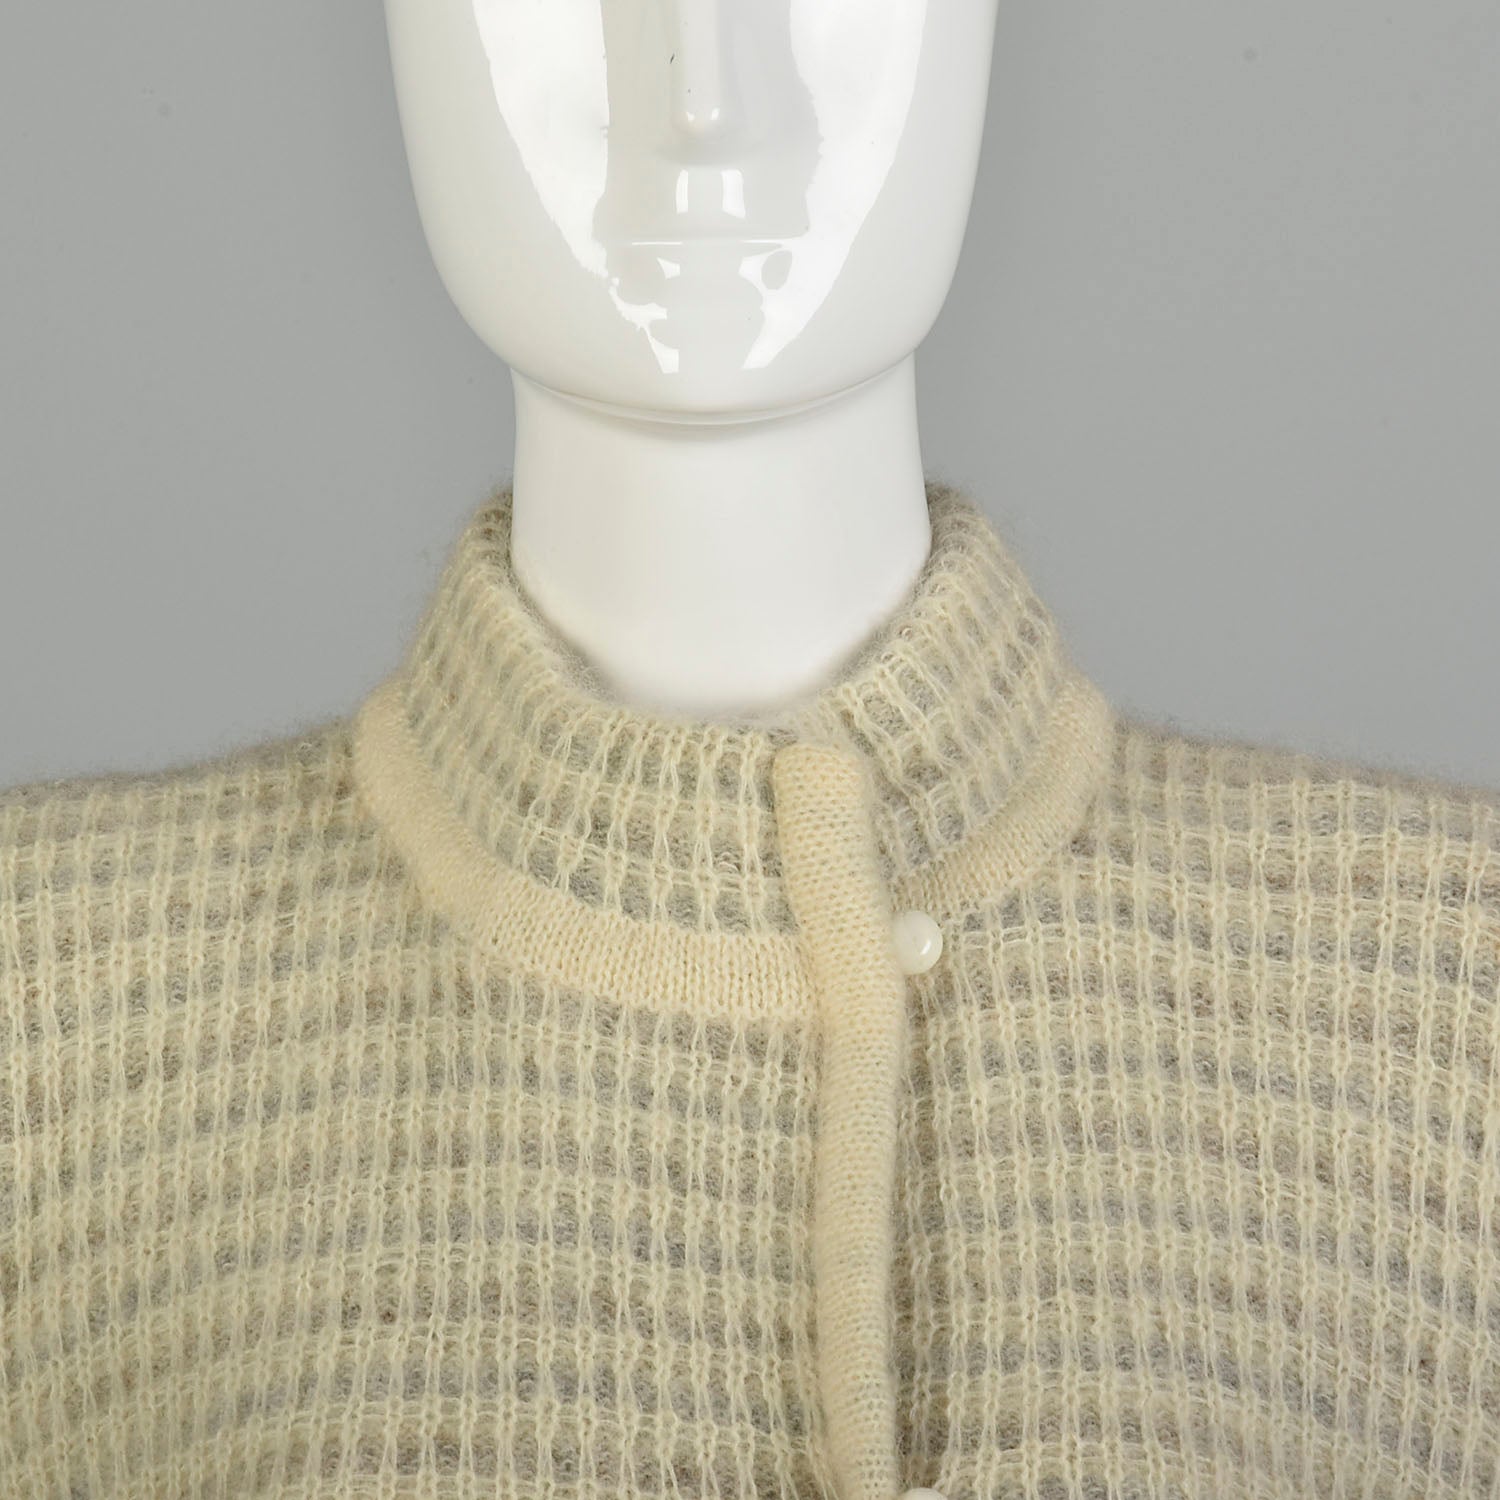 Medium 1980s Cozy Autumn Sweater Jacket Asymmetric Knit Cardigan Heavy Winter Sweater Coat